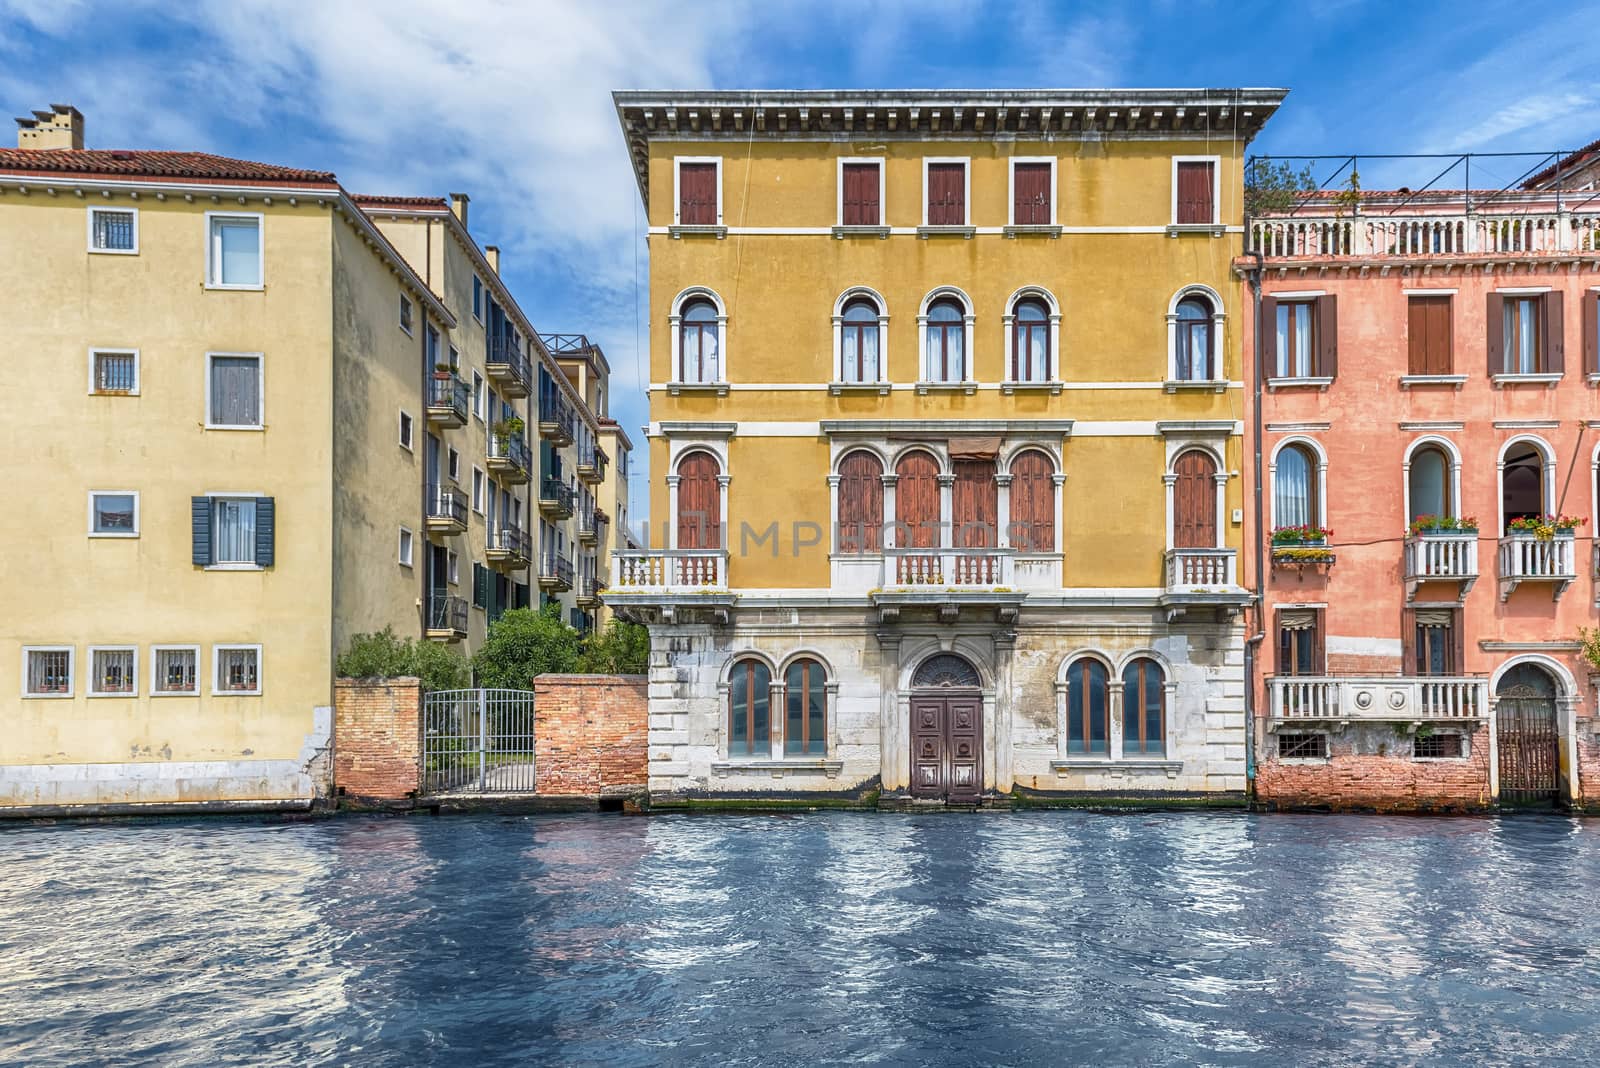 Scenic architecture along the Grand Canal in Cannaregio district of Venice, Italy